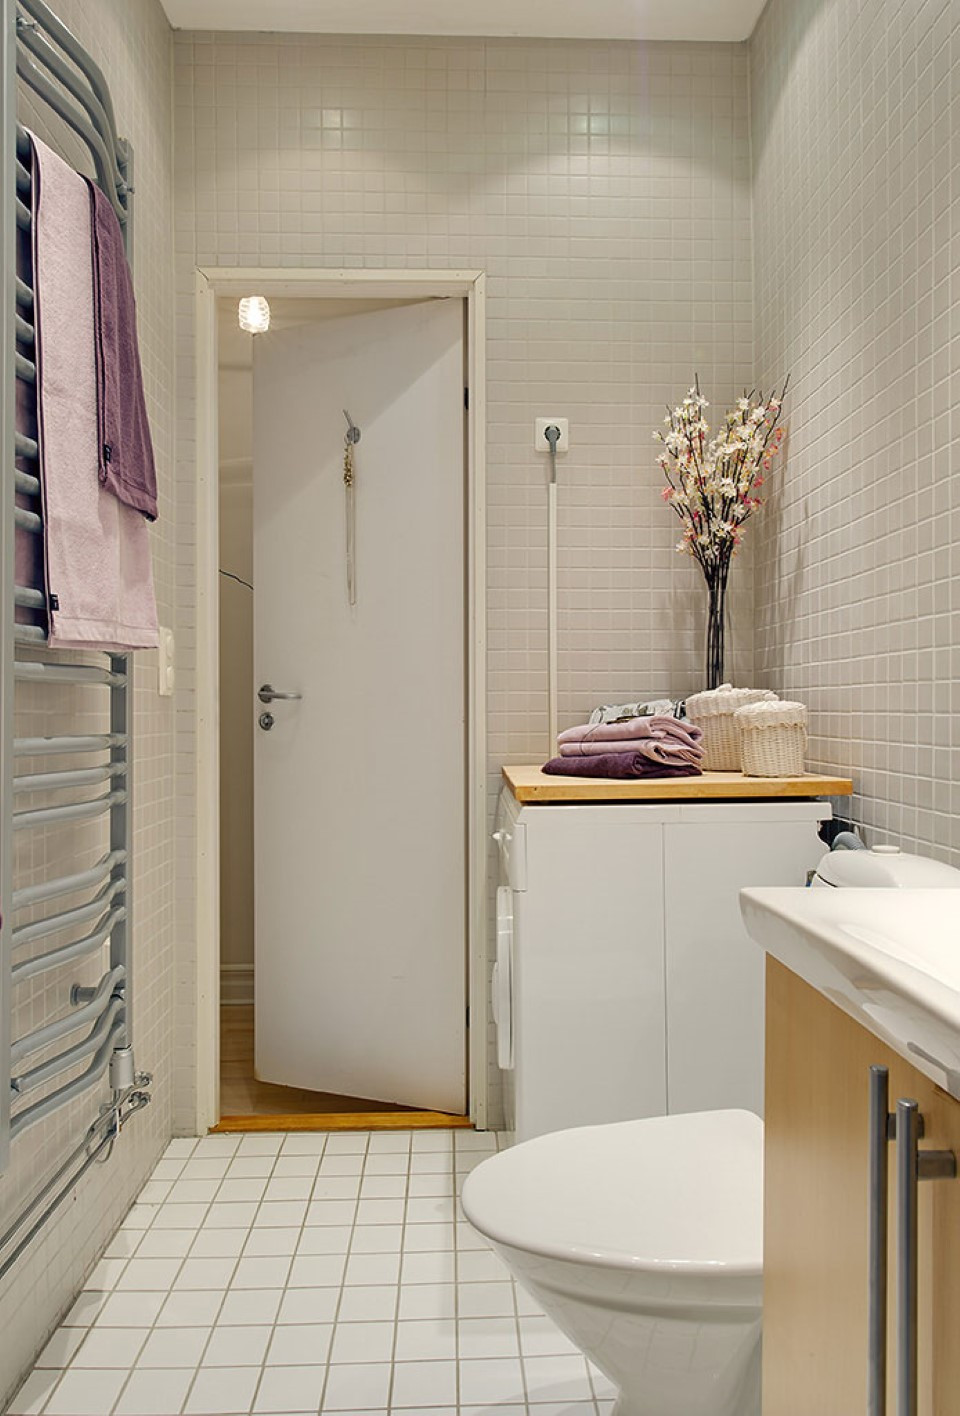 Apartment Bathroom Decor
 Modern Minimalist Apartment Bathroom Interior Design with